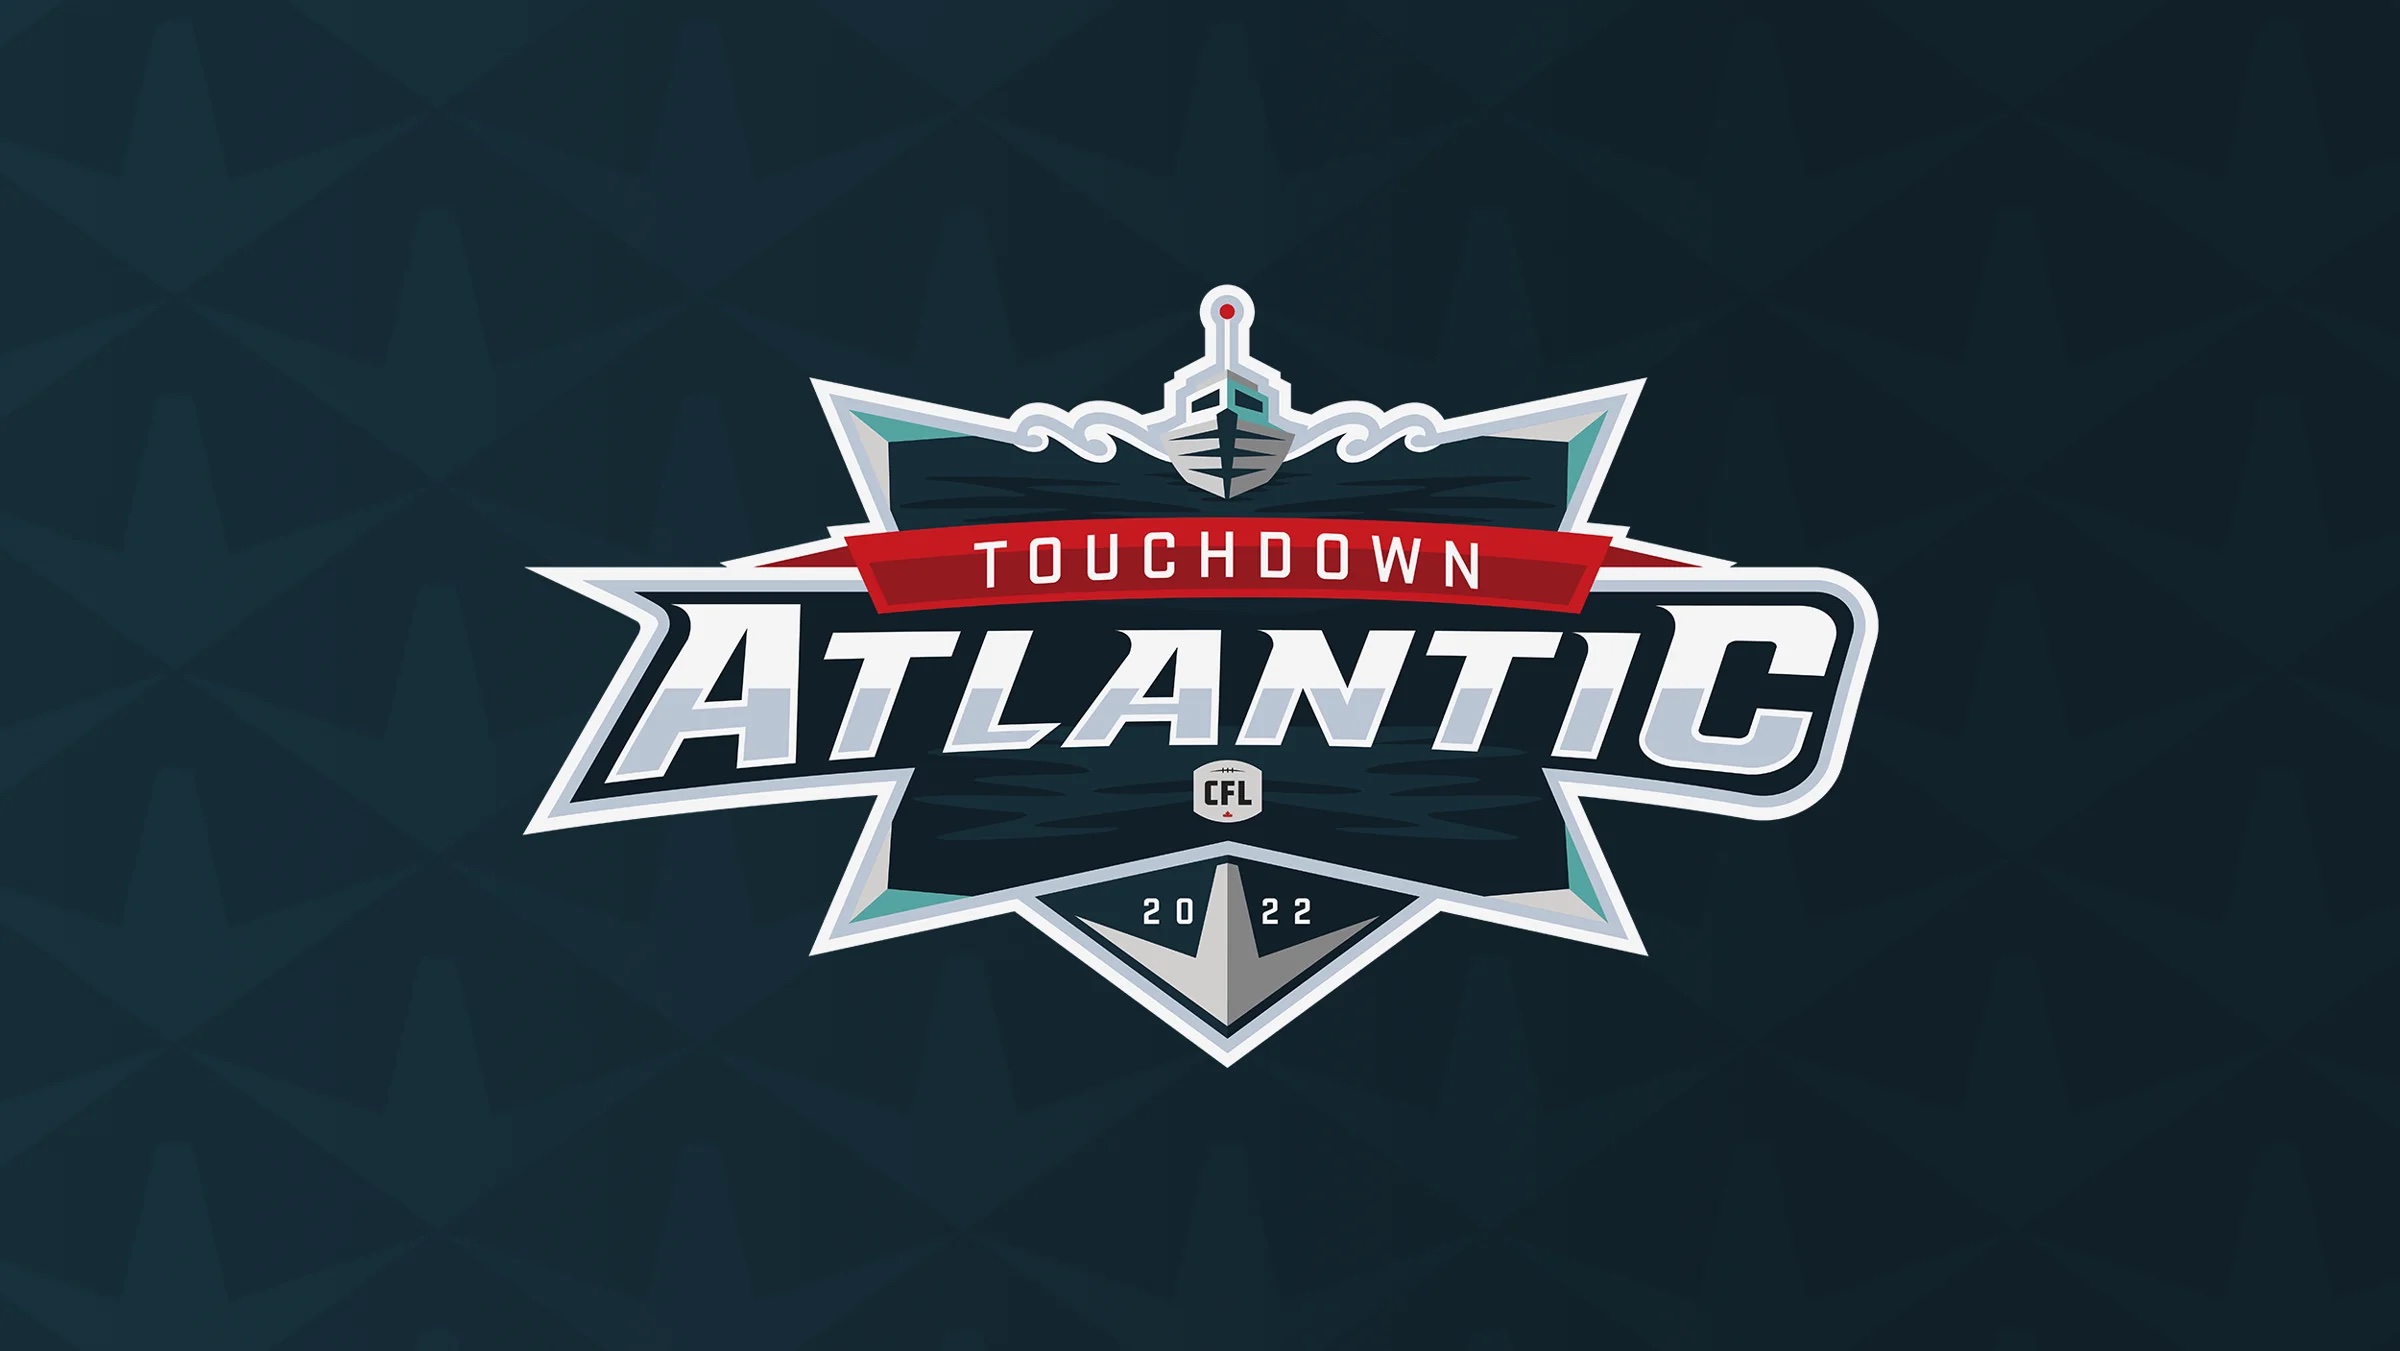 Touchdown Atlantic CFL is Coming to Nova Scotia! Family Fun Halifax